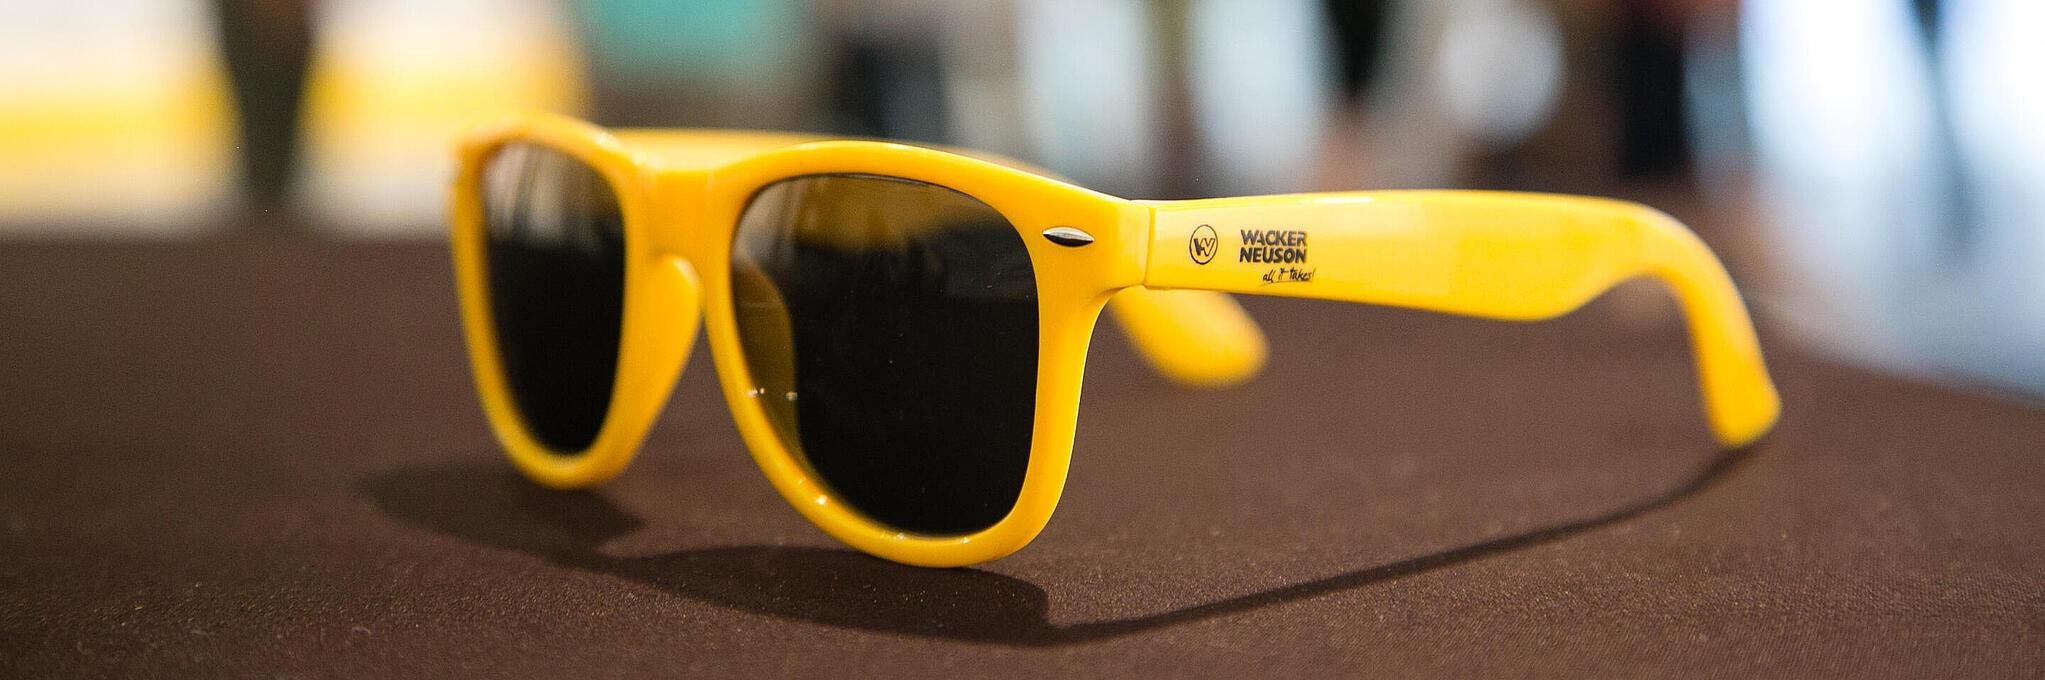 Gele zonnebril met Wacker Neuson-logo.